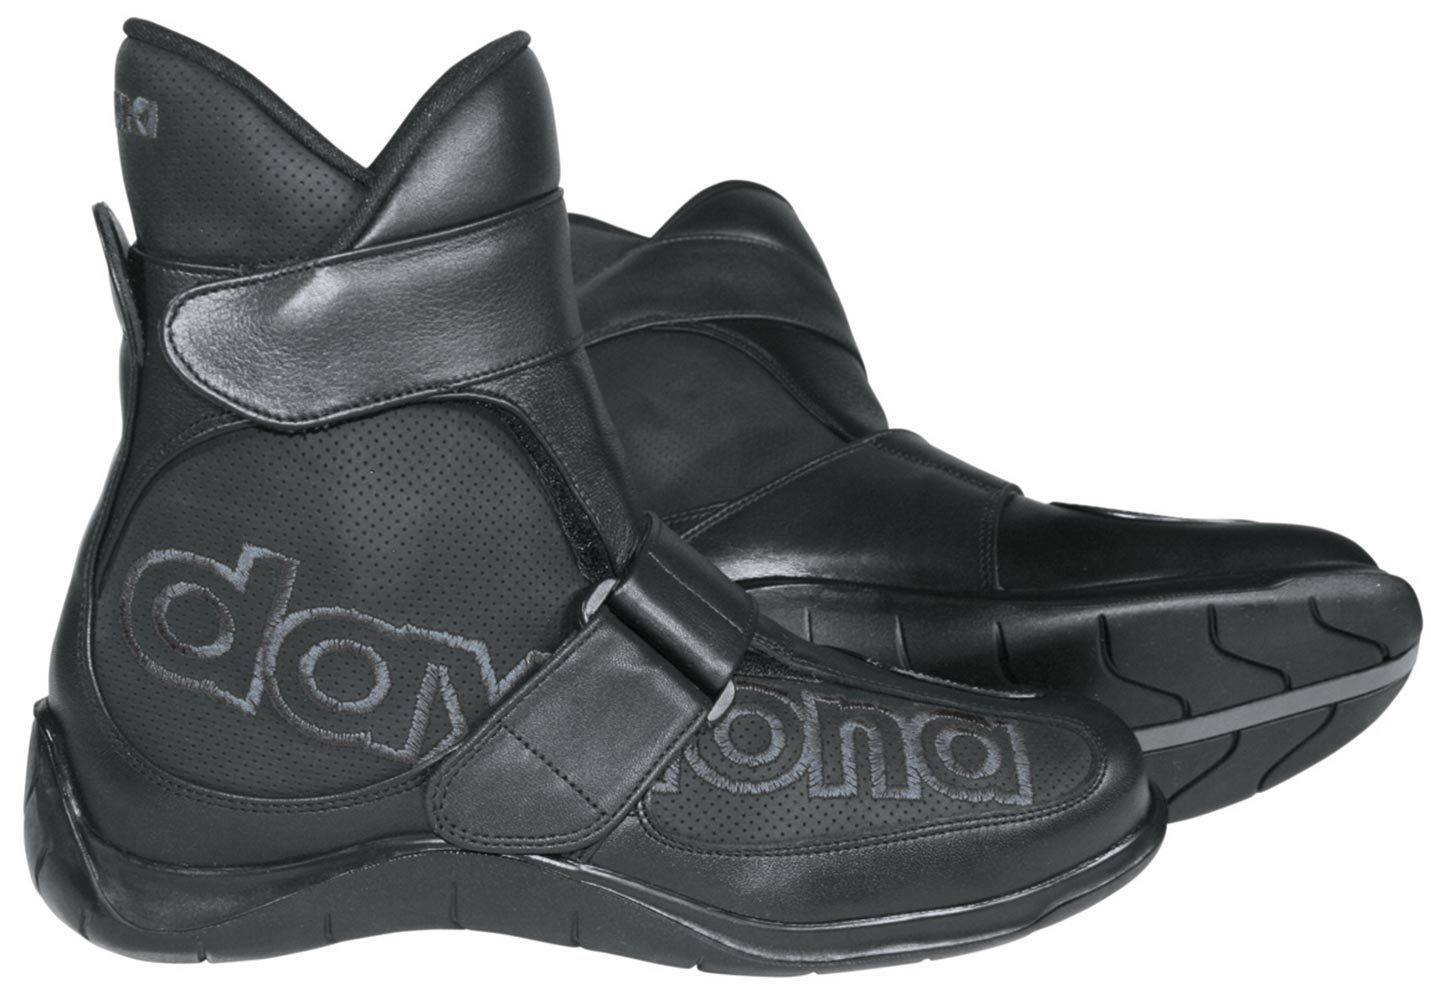 Daytona Shorty Motorradschuhe, schwarz, Größe 38